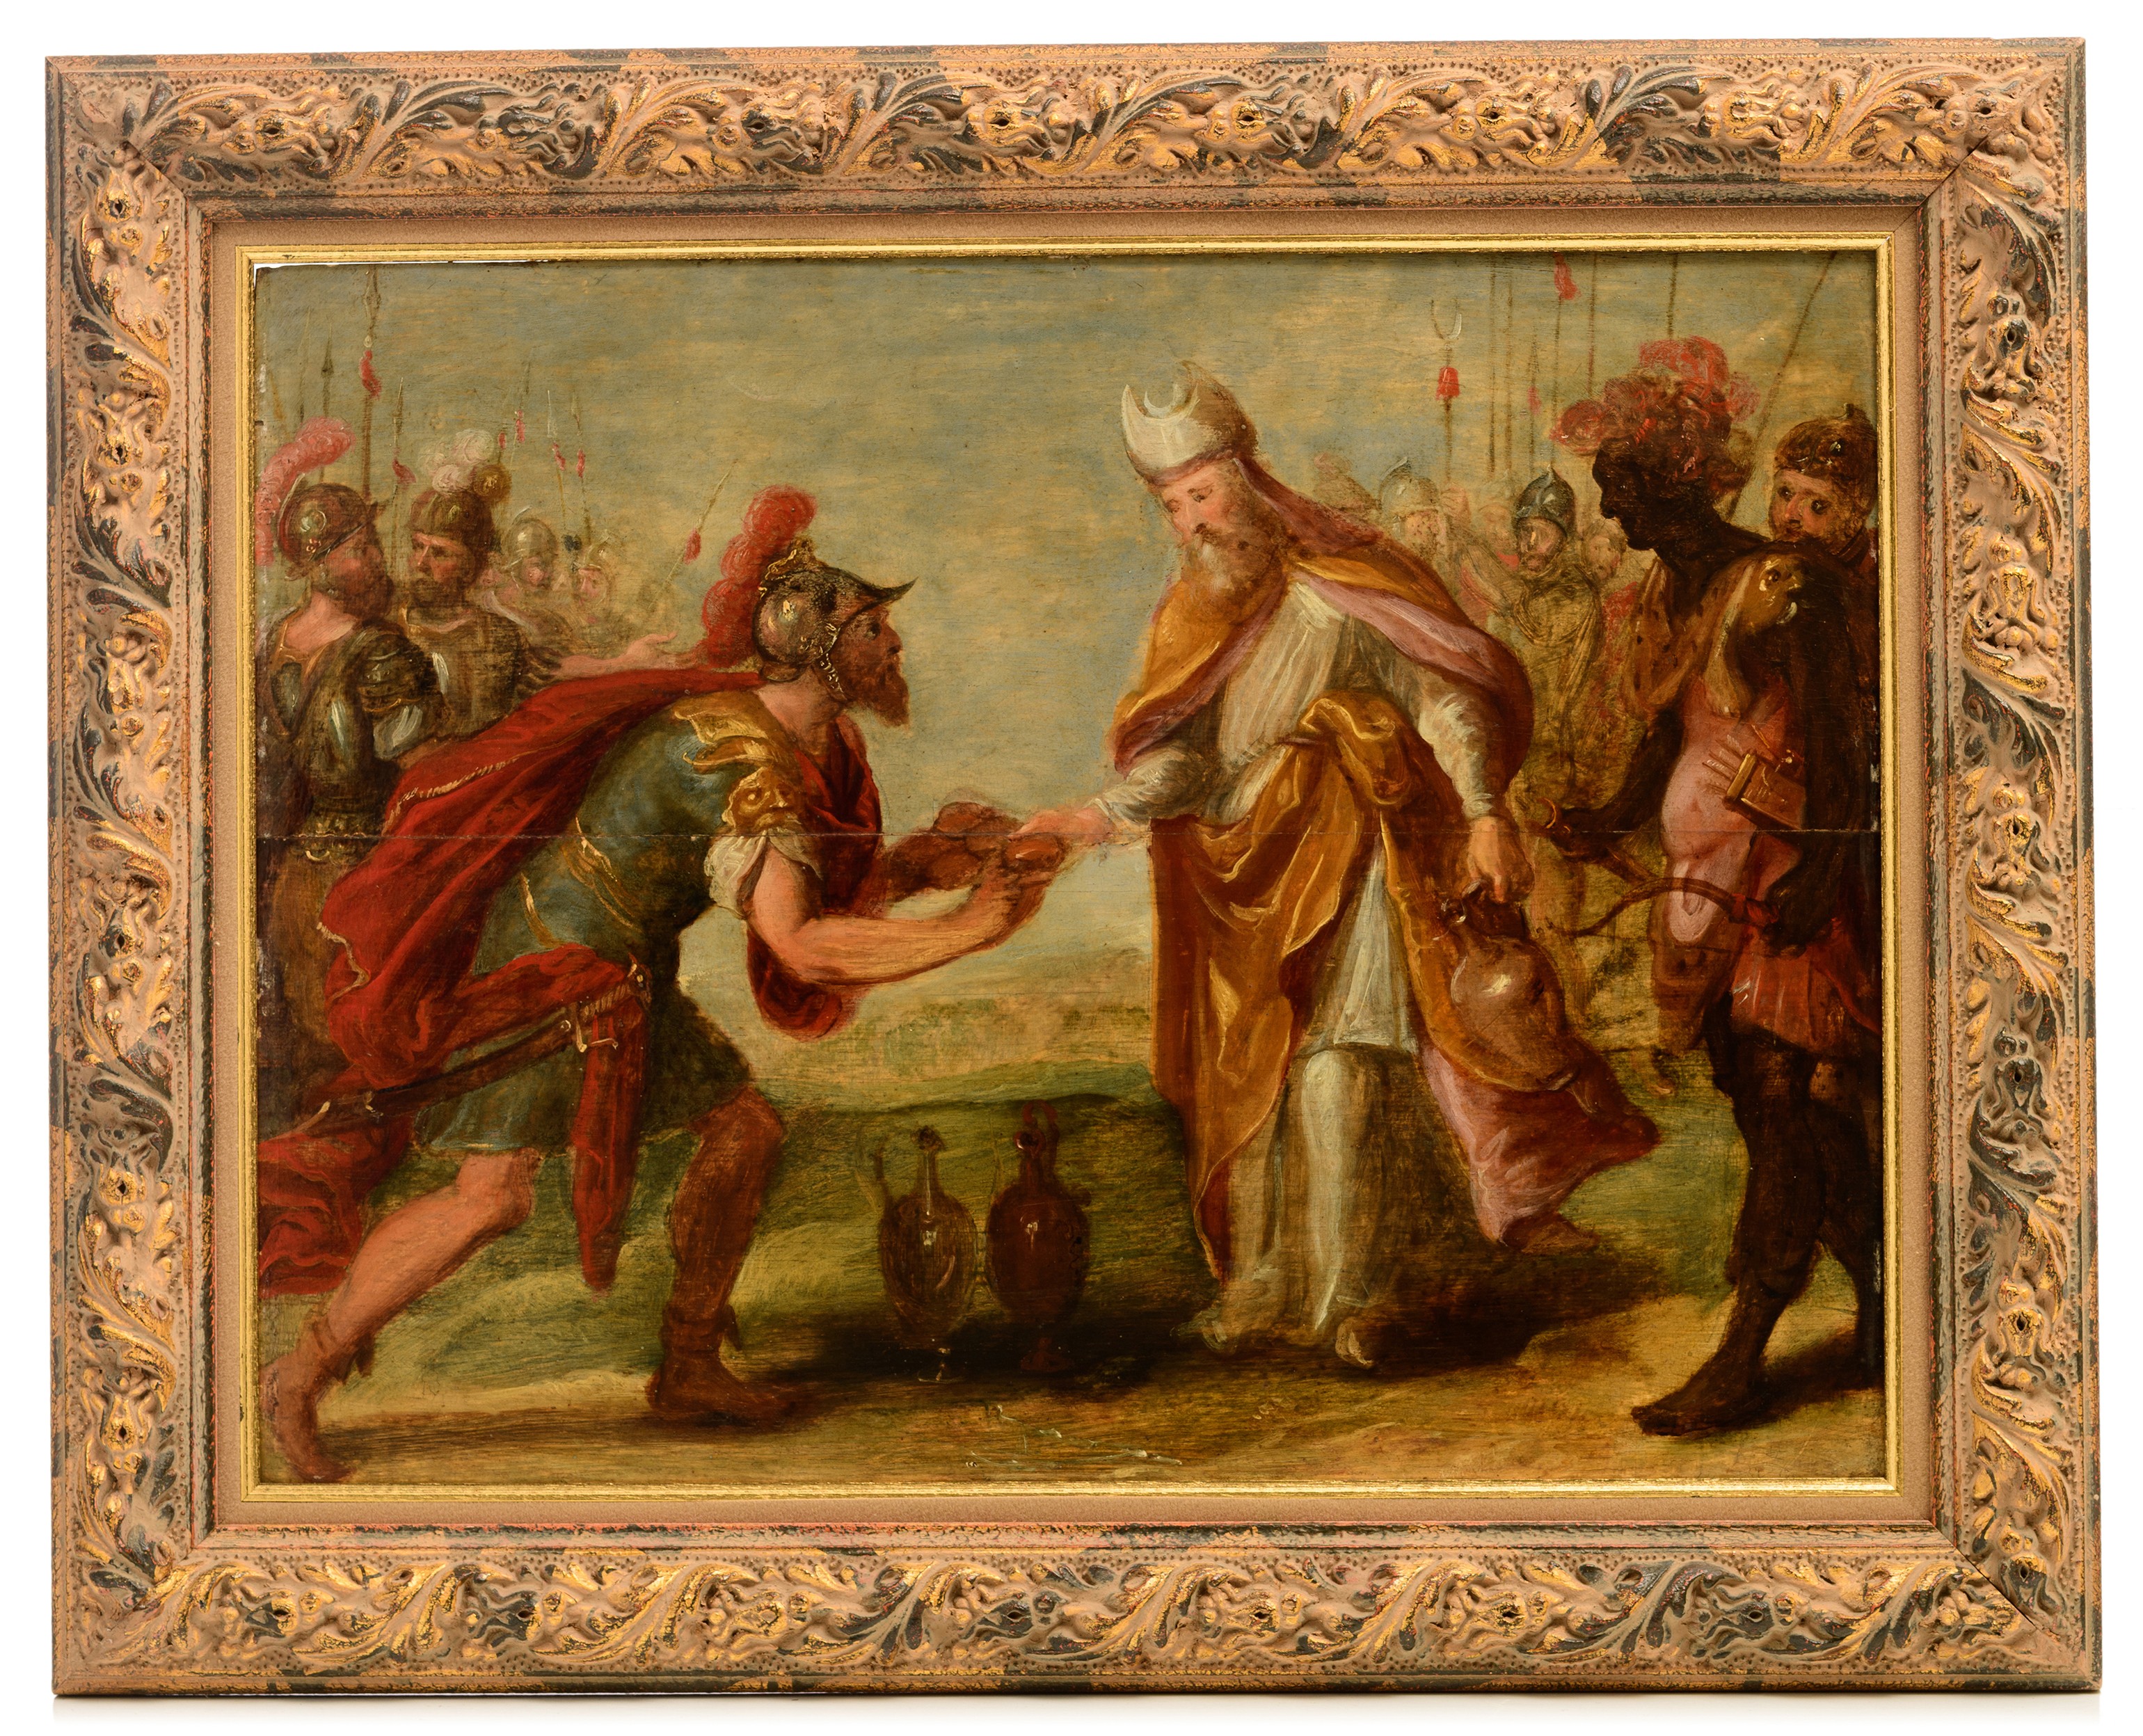 Antwerp School, 'Melchizedek and Abraham', 17thC, oil on panel, 48 x 64 cm - Image 2 of 7